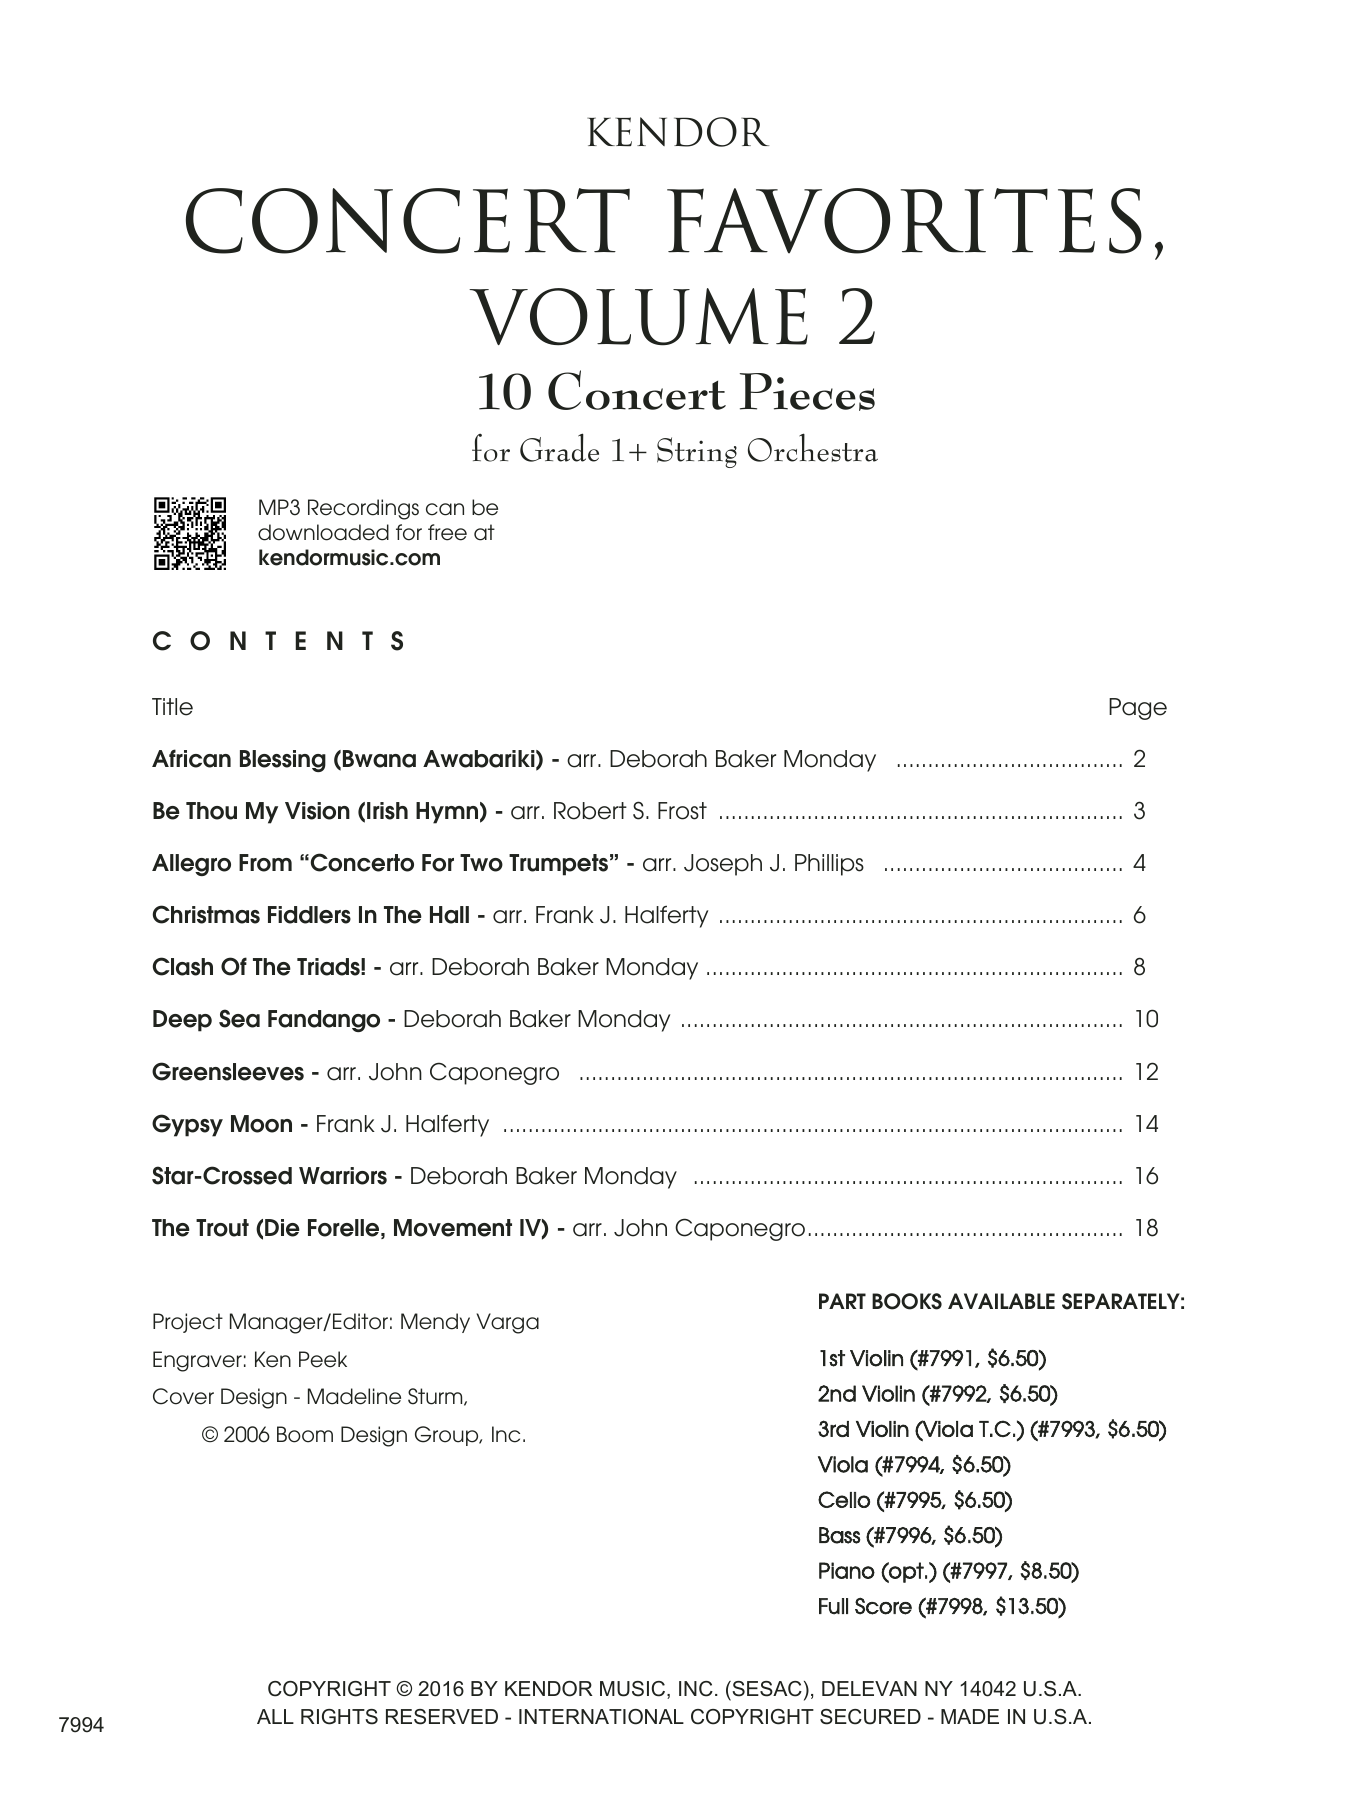 Download Various Kendor Concert Favorites, Volume 2 - Vi Sheet Music